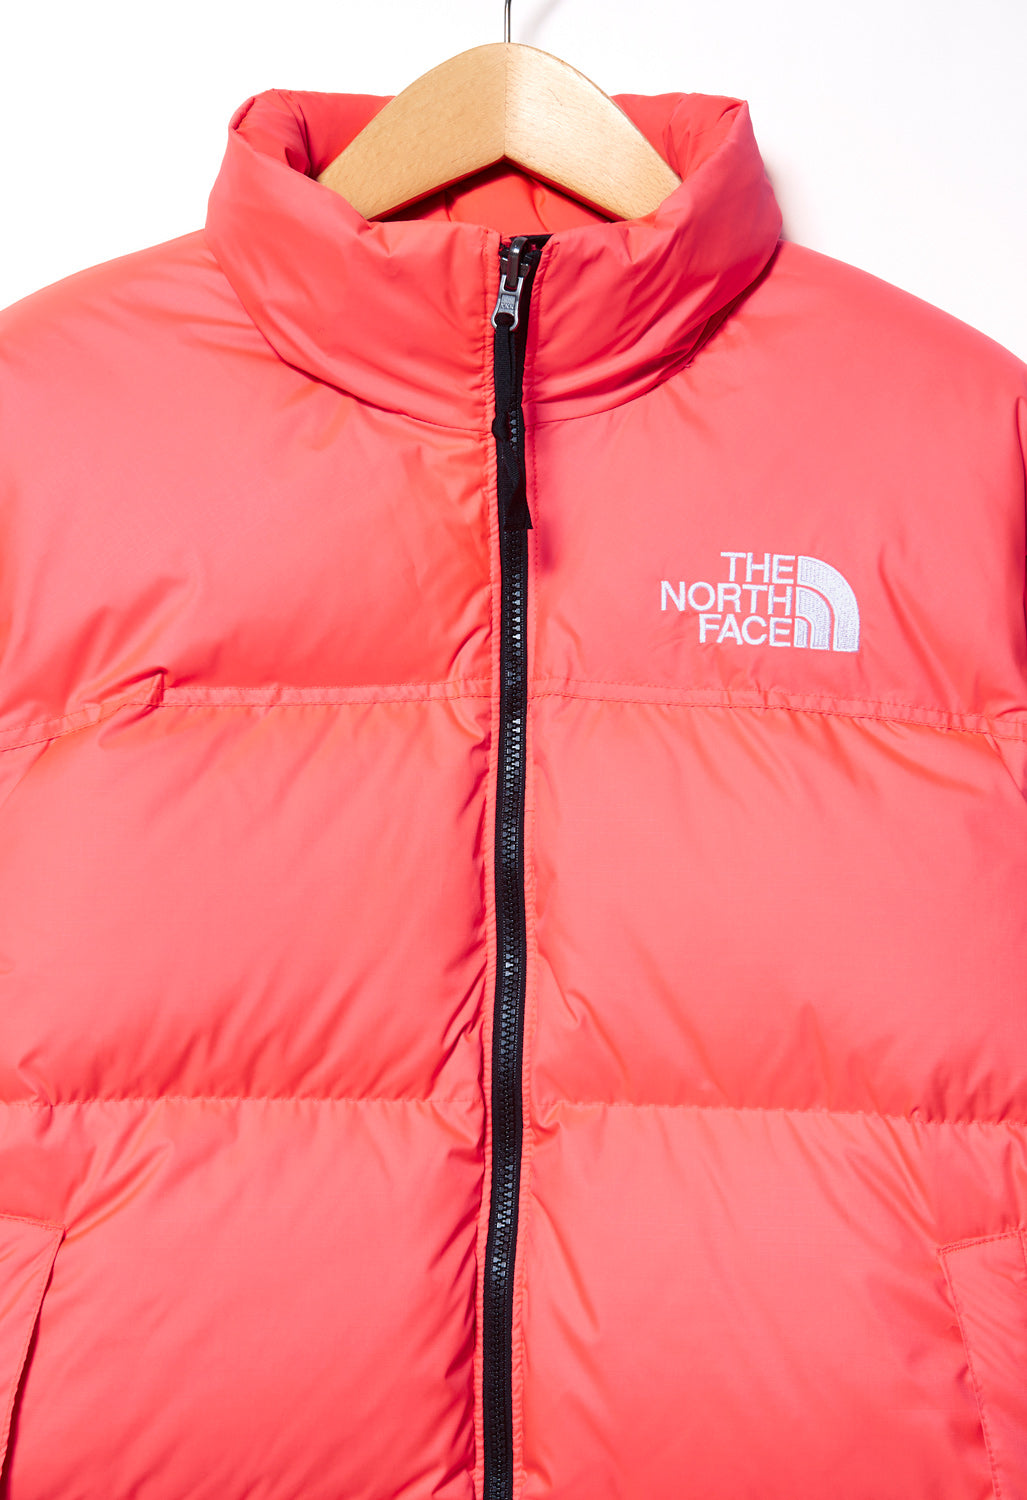 The North Face 1996 Retro Nuptse Men's Jacket - Brilliant Coral